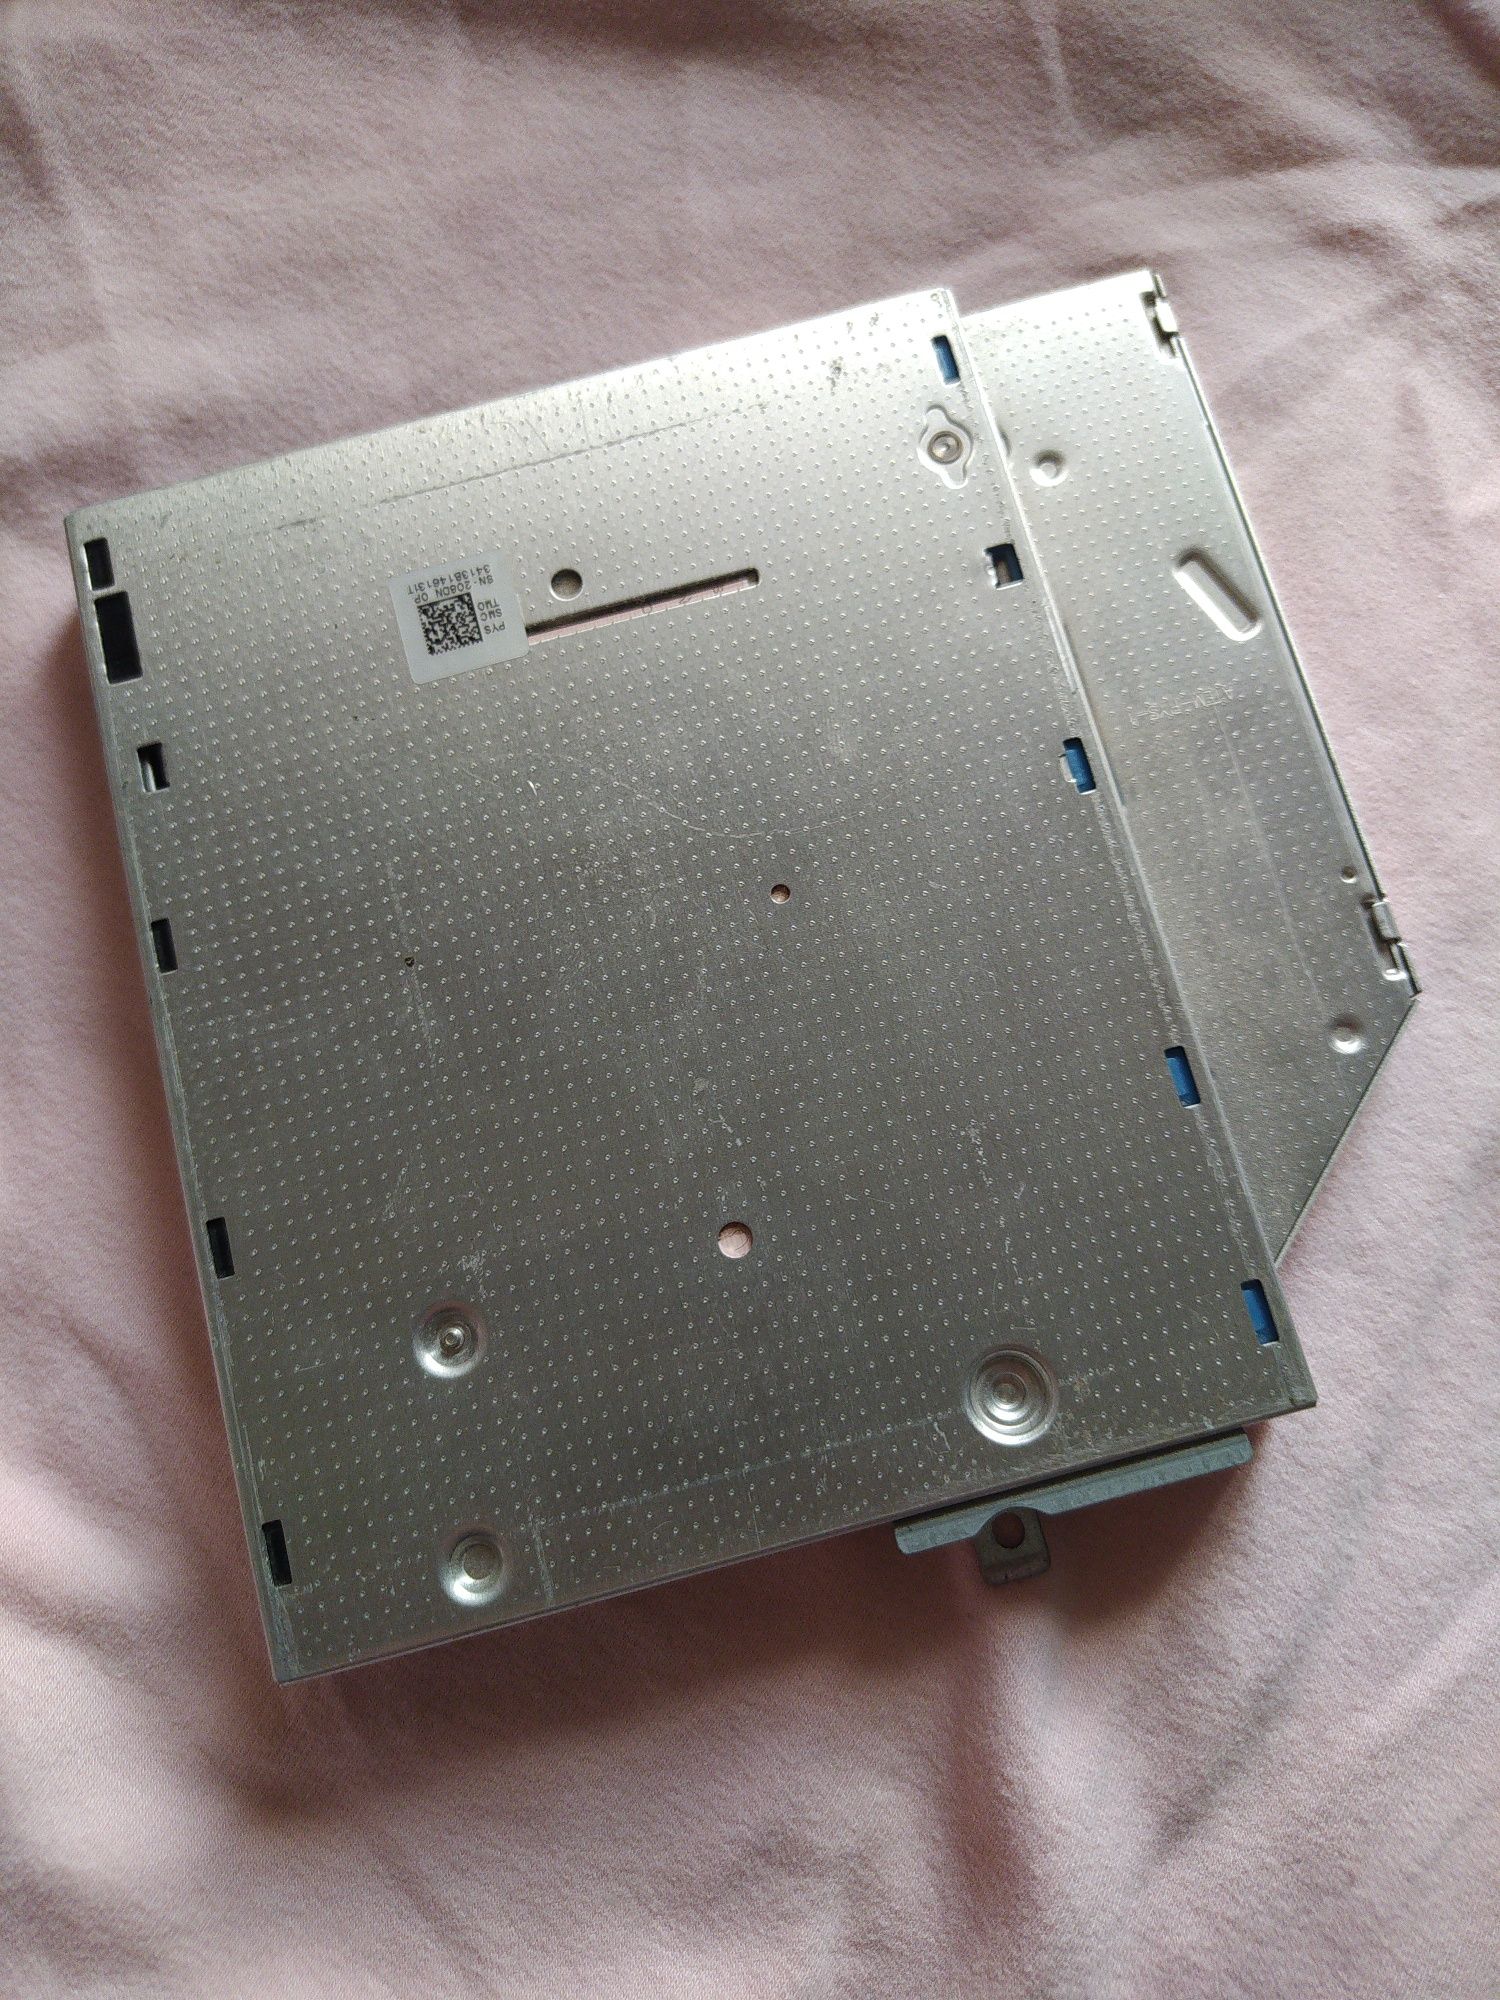 Дисковод/Оптический привод DVD Writer Model SN-208 для ноутбука.